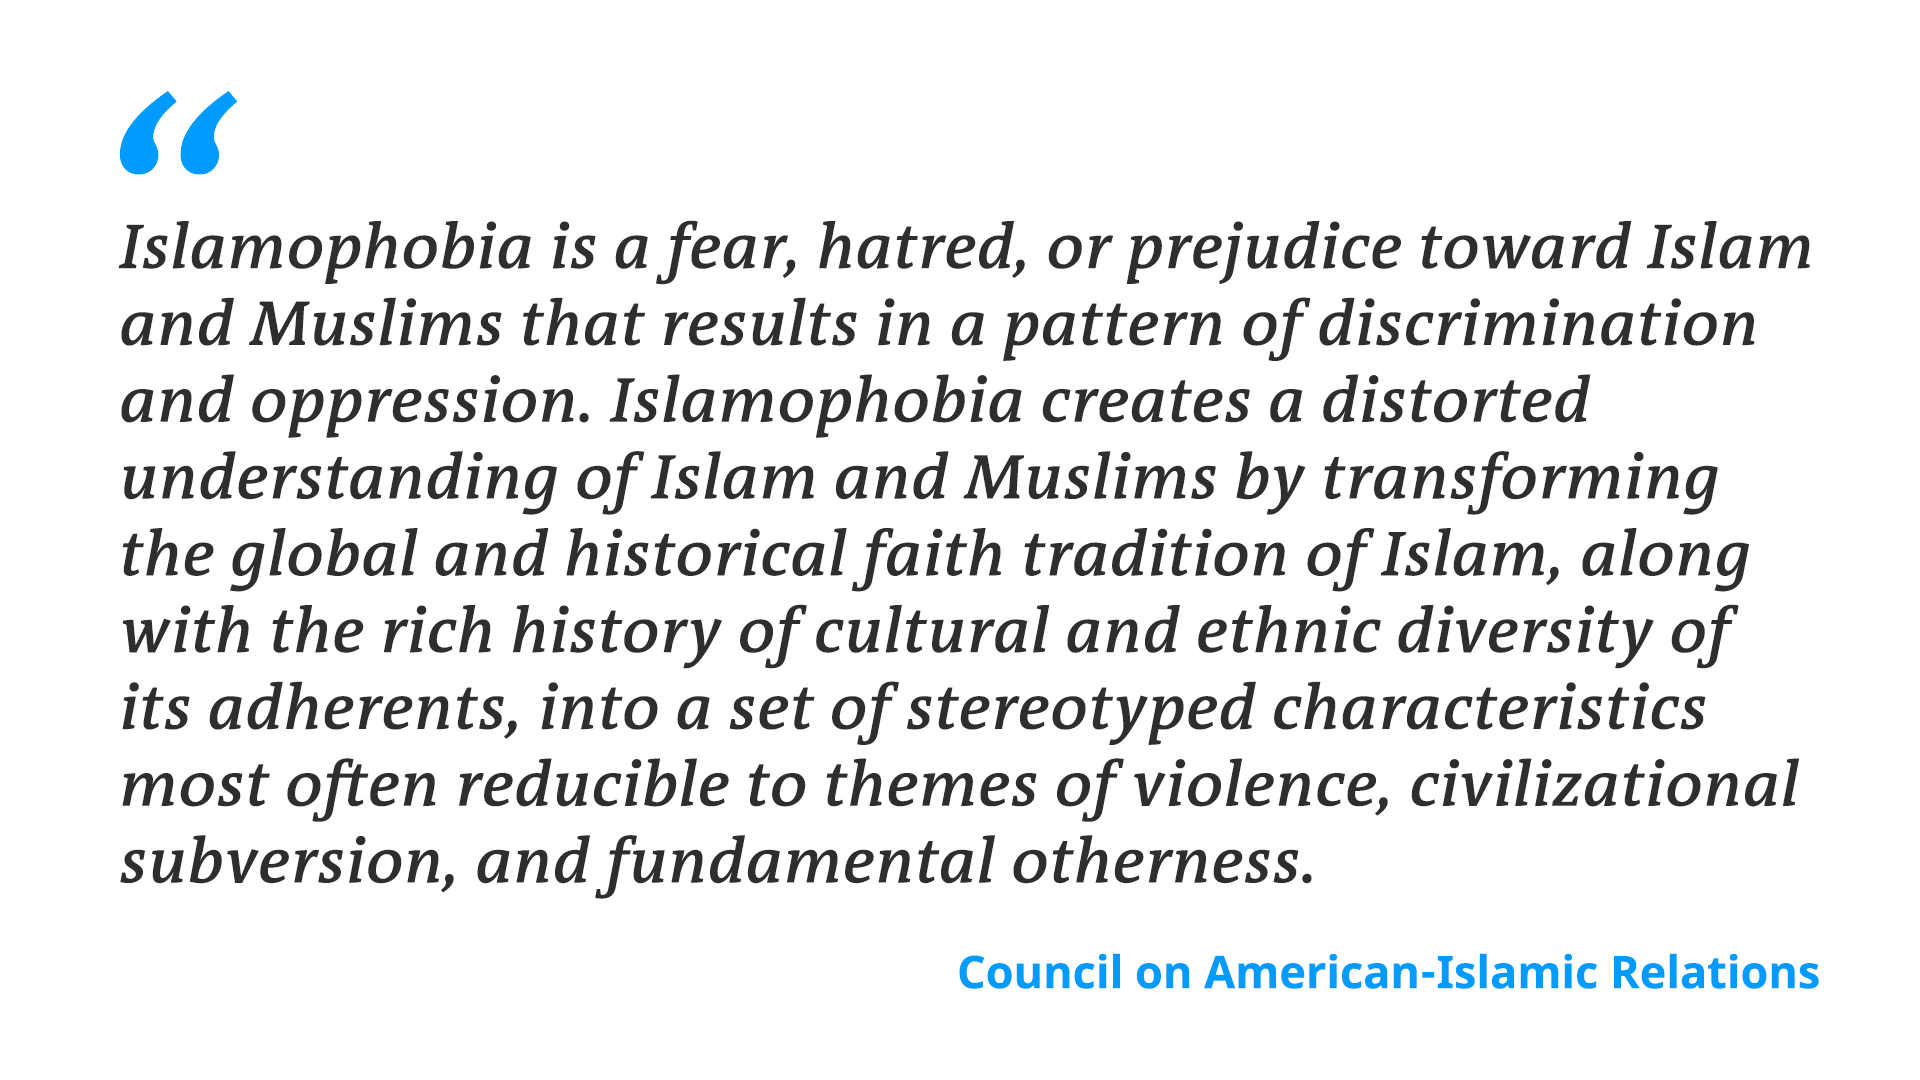 Council on American-Islamic Relations statement on Islamophobia